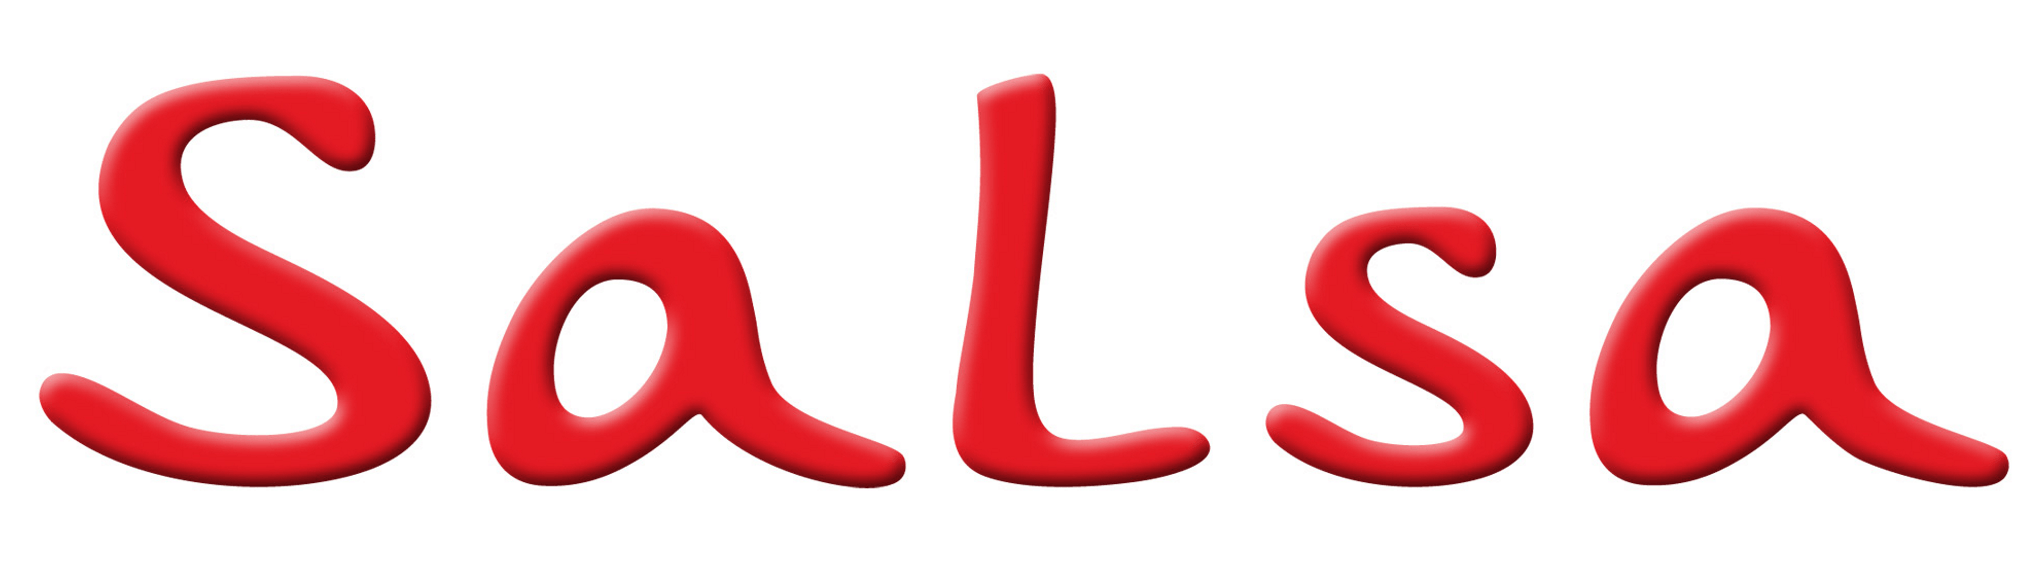 Salsa Jeans logo, logotype